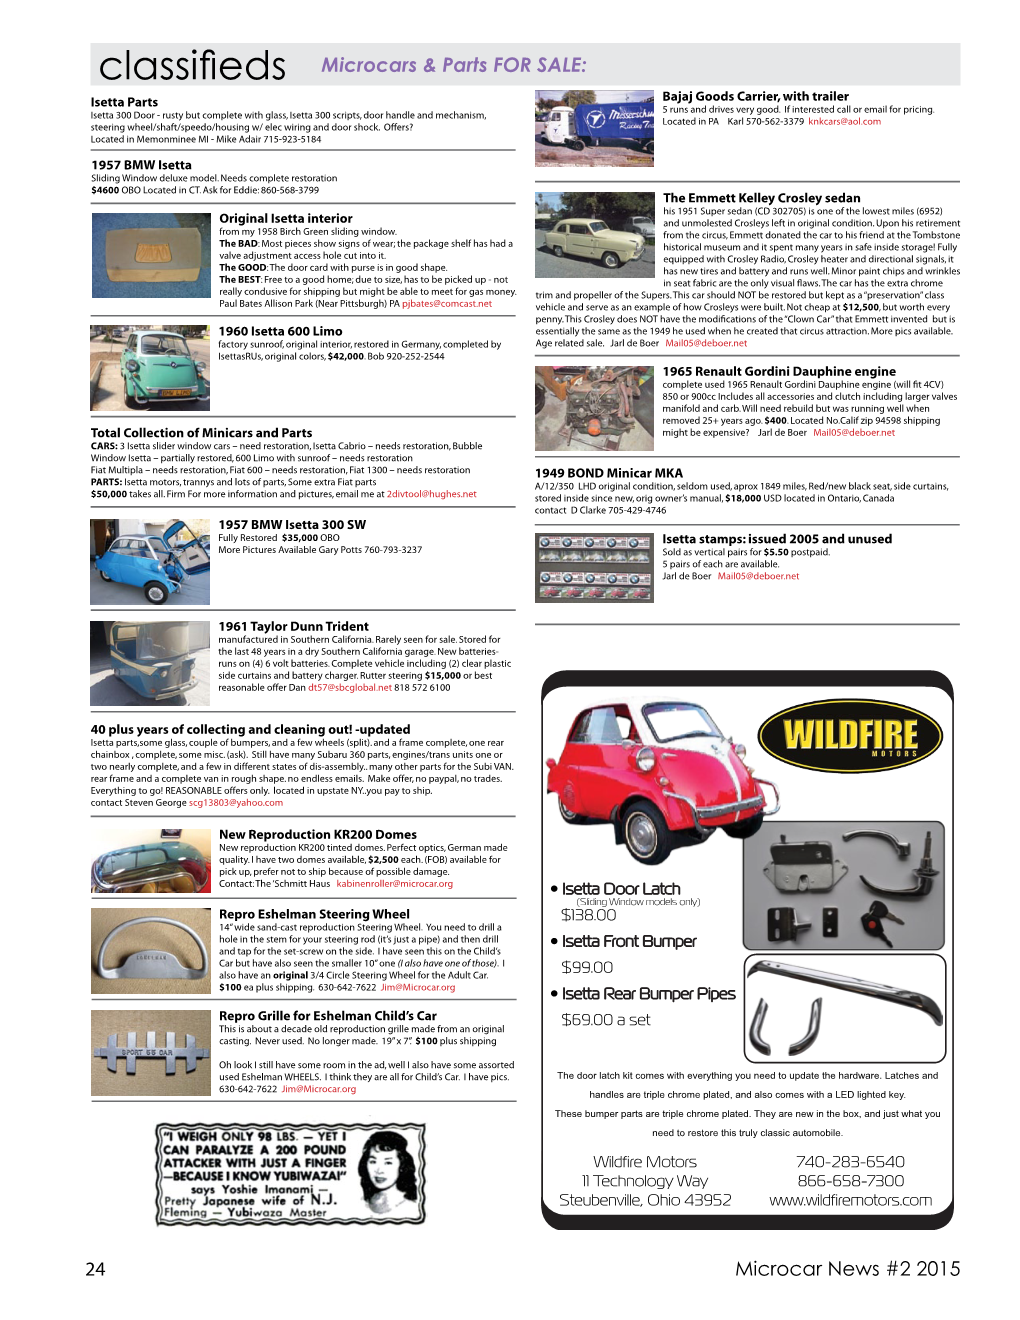 24 Microcar News #2 2015 Classifieds